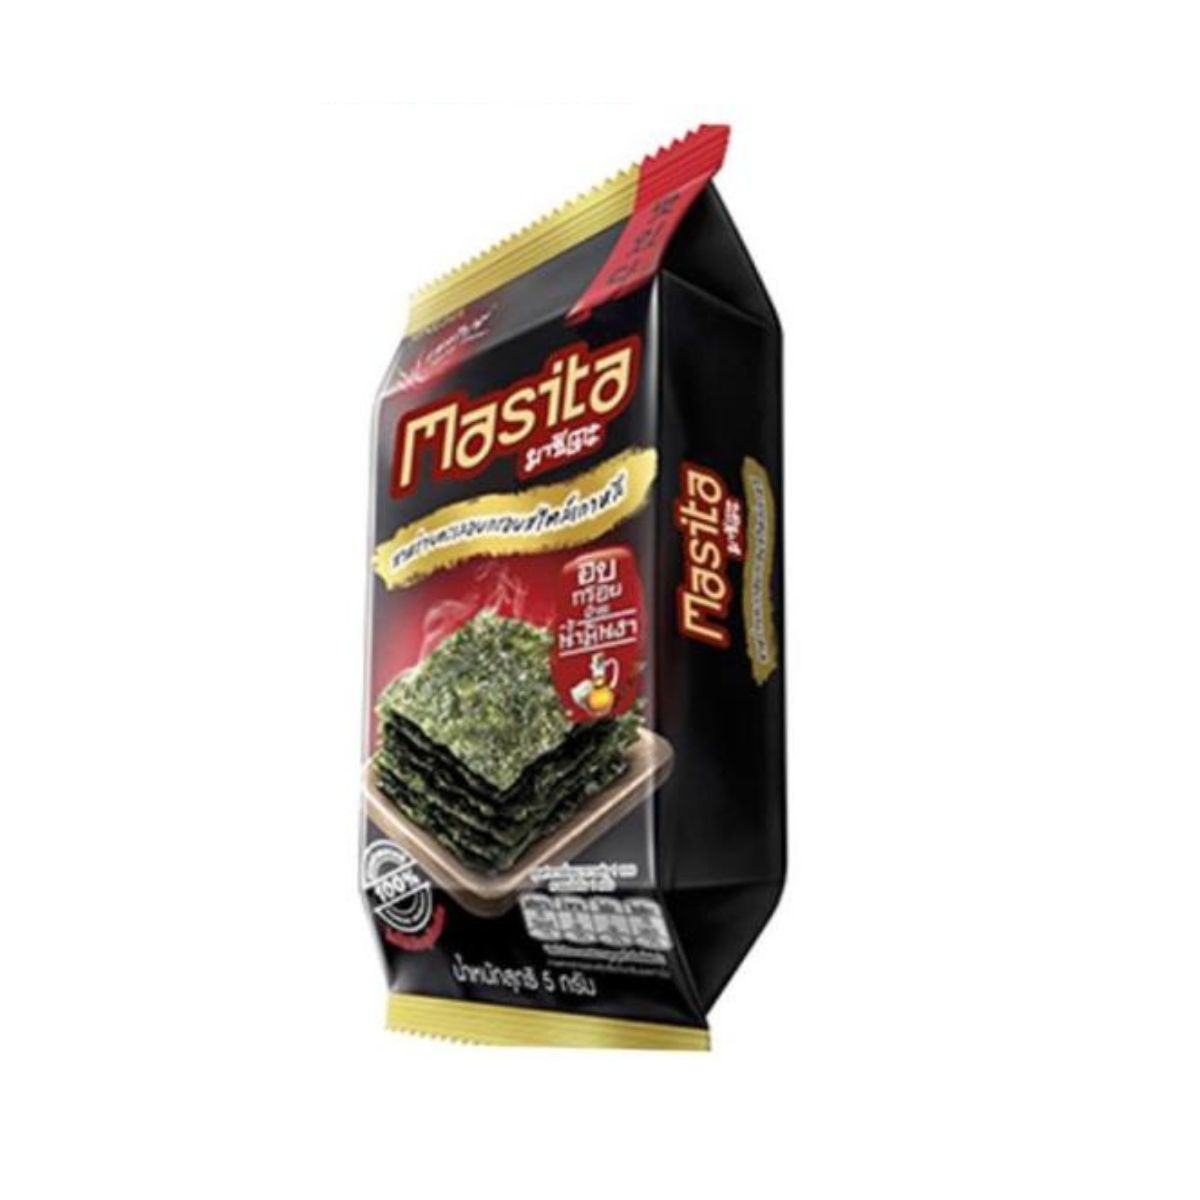 Masita - Korean Style Roasted Seaweed - Spicy Flavour - 5g